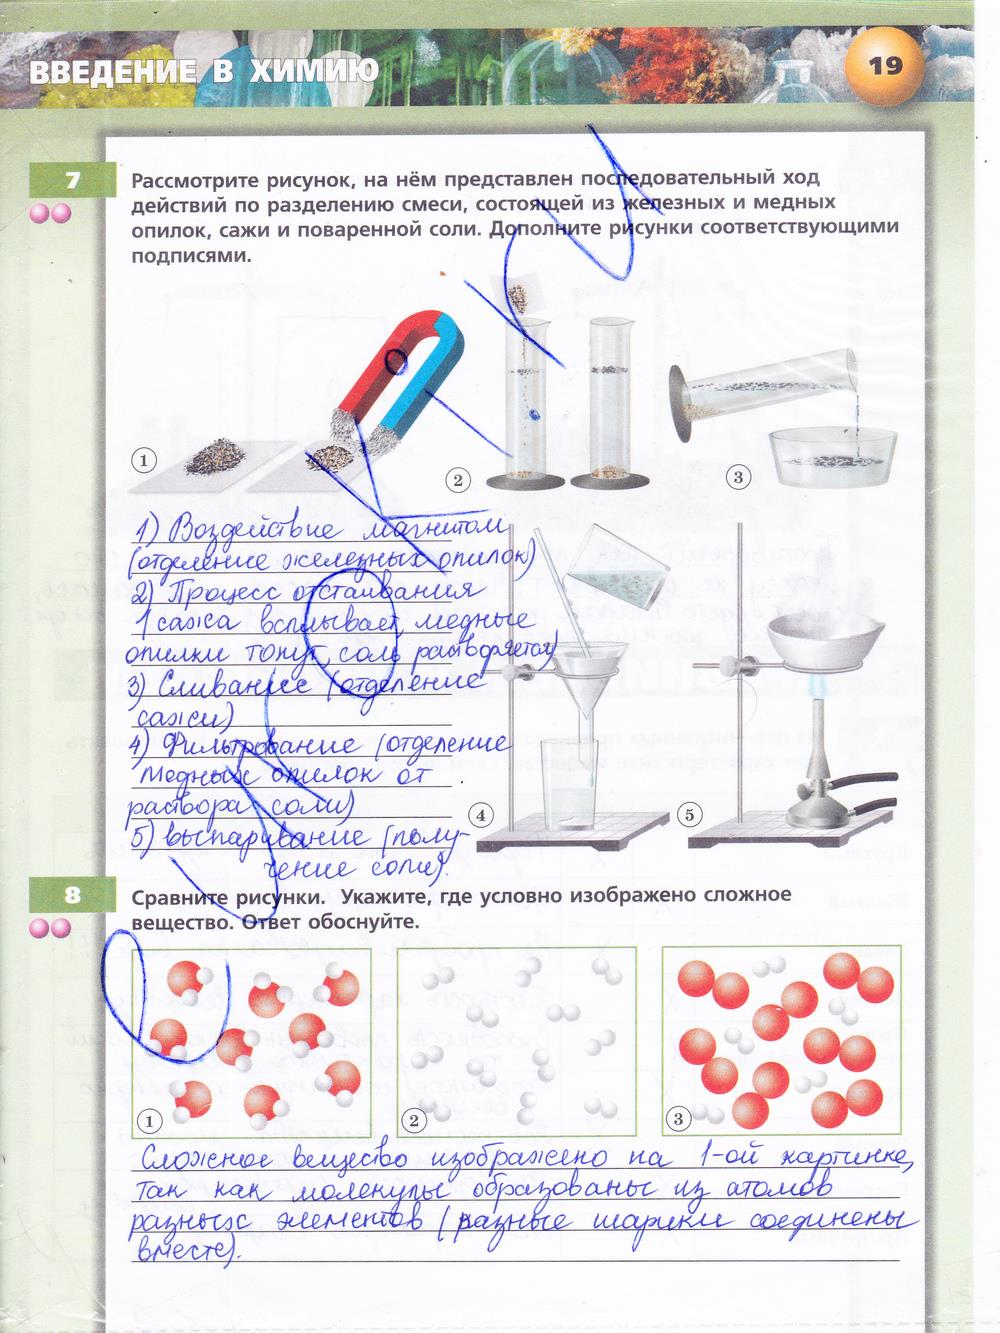 гдз 8 класс тетрадь-тренажёр страница 19 химия Гара